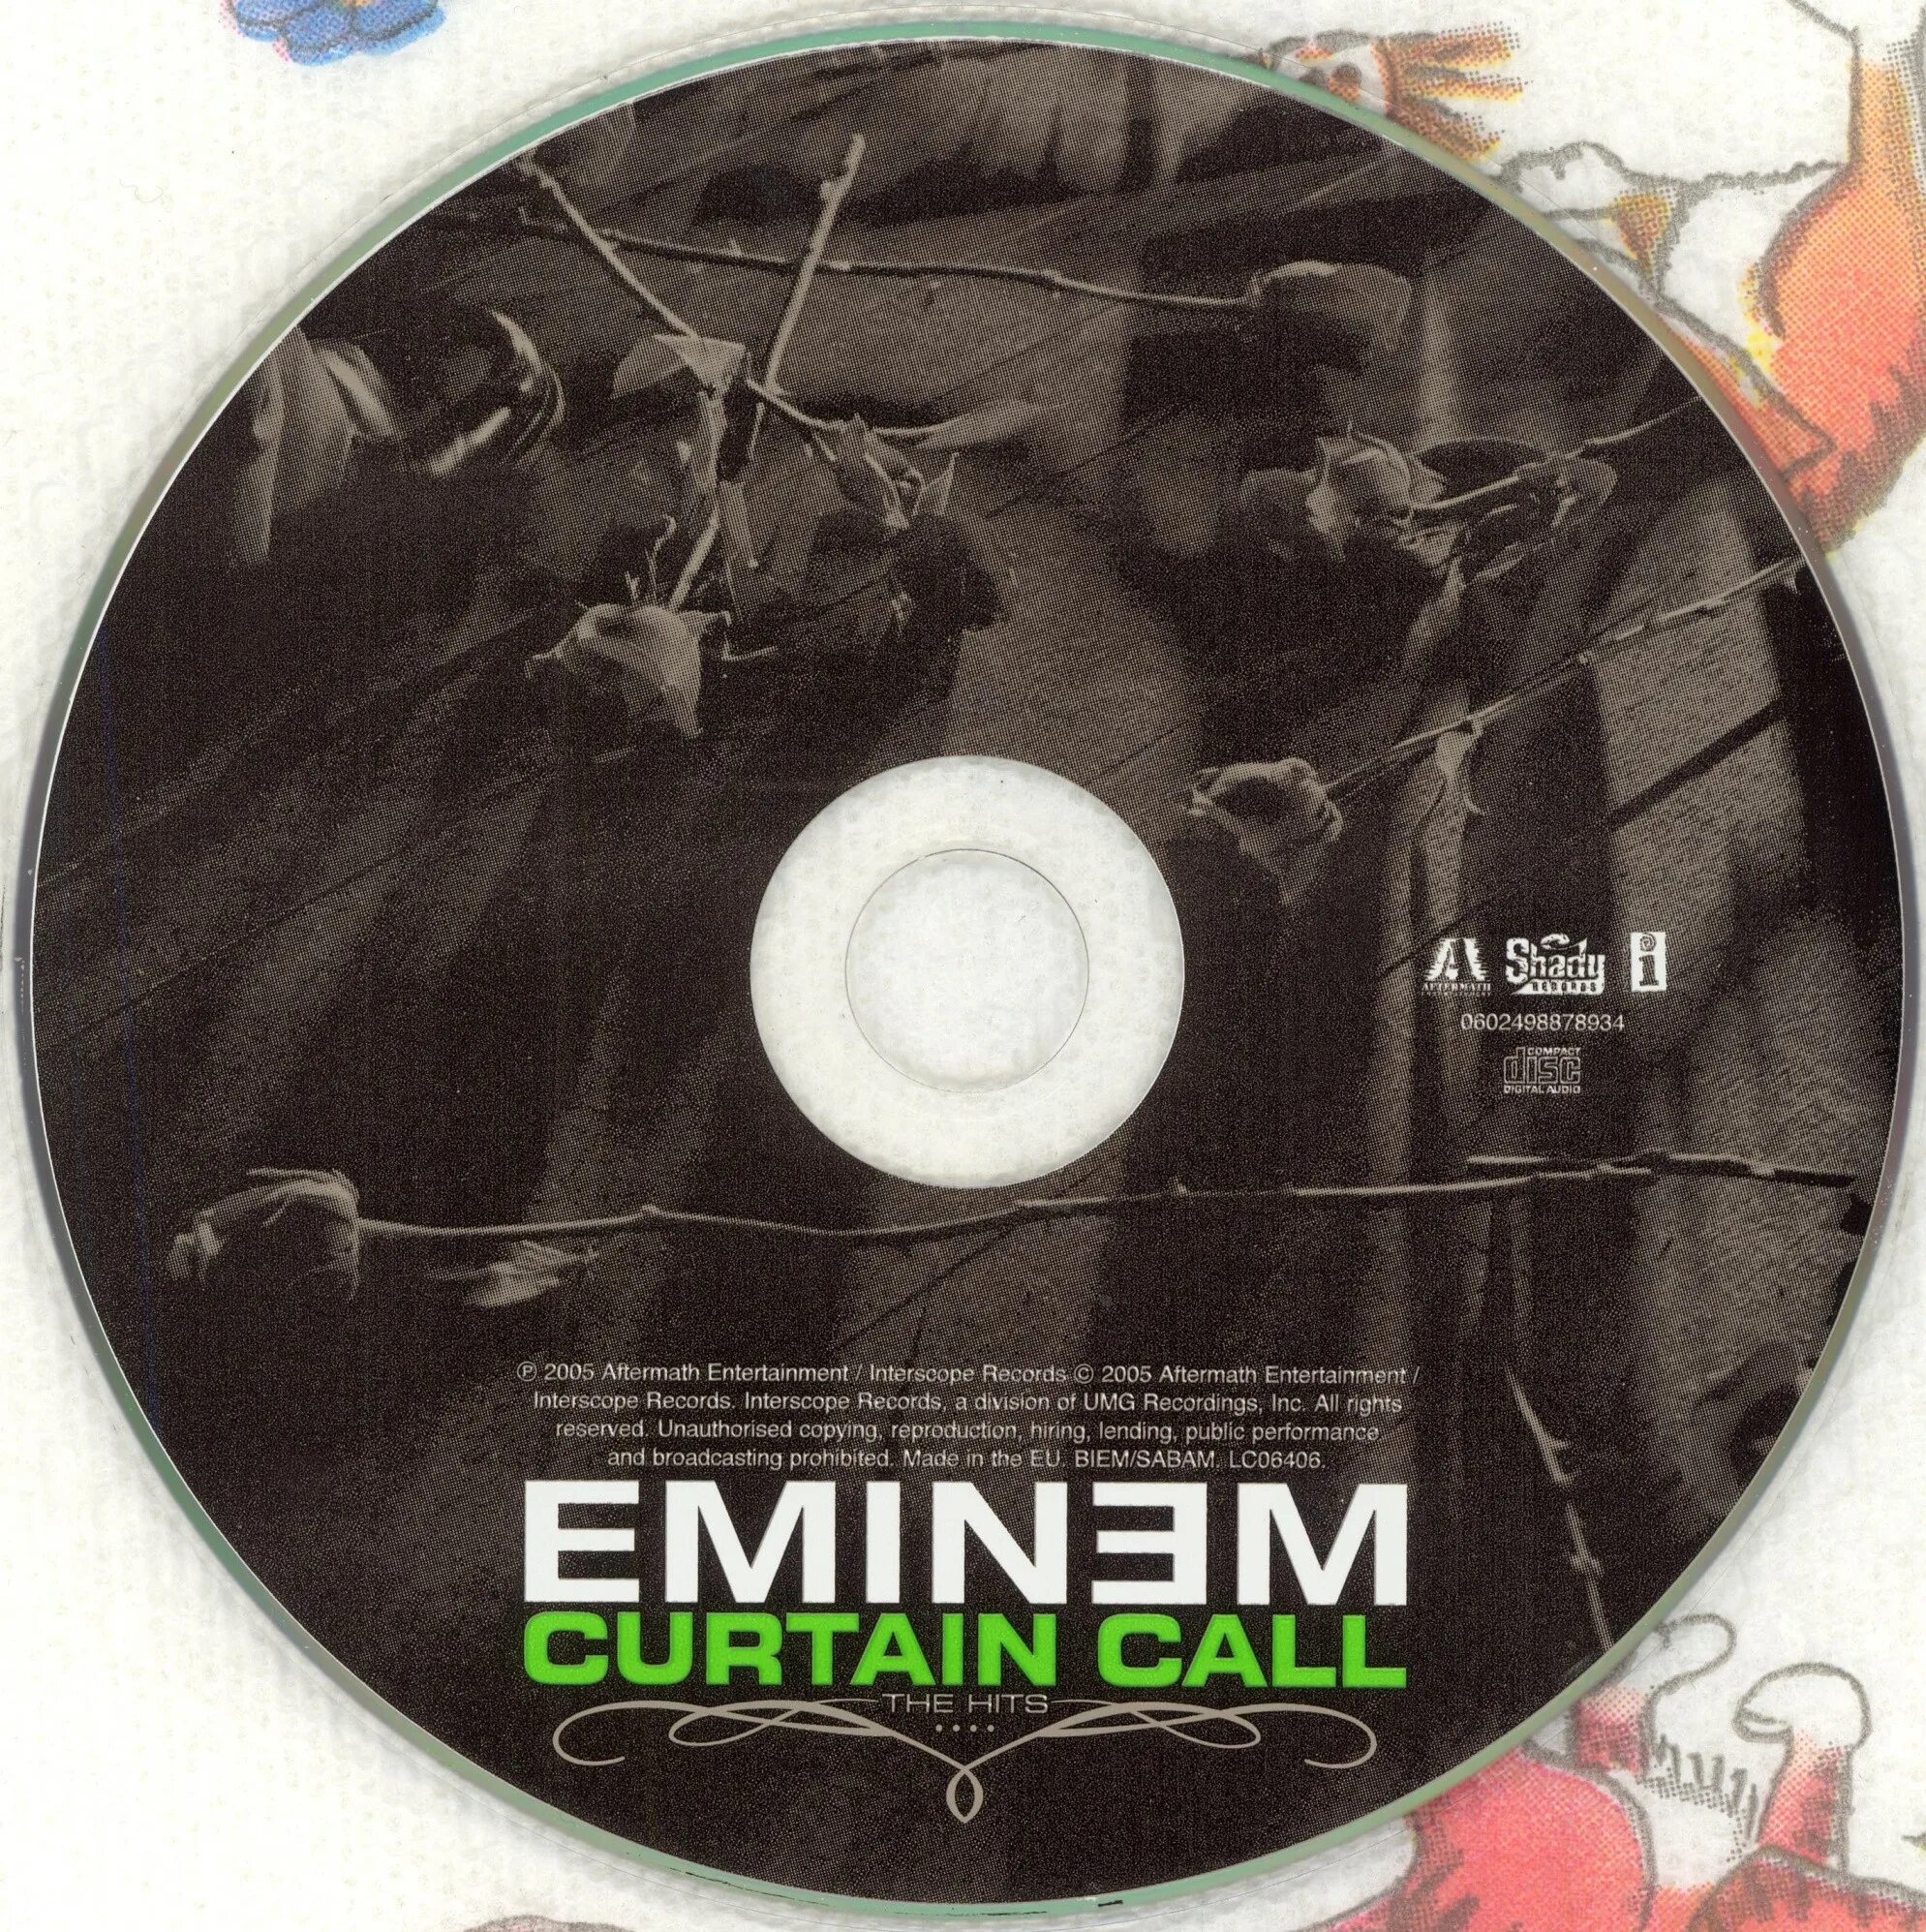 Eminem curtain. Eminem Curtain Call диск. CD диск Eminem. Curtain Call: the Hits Эминем. Eminem. Curtain Call. The Hits. 2005.